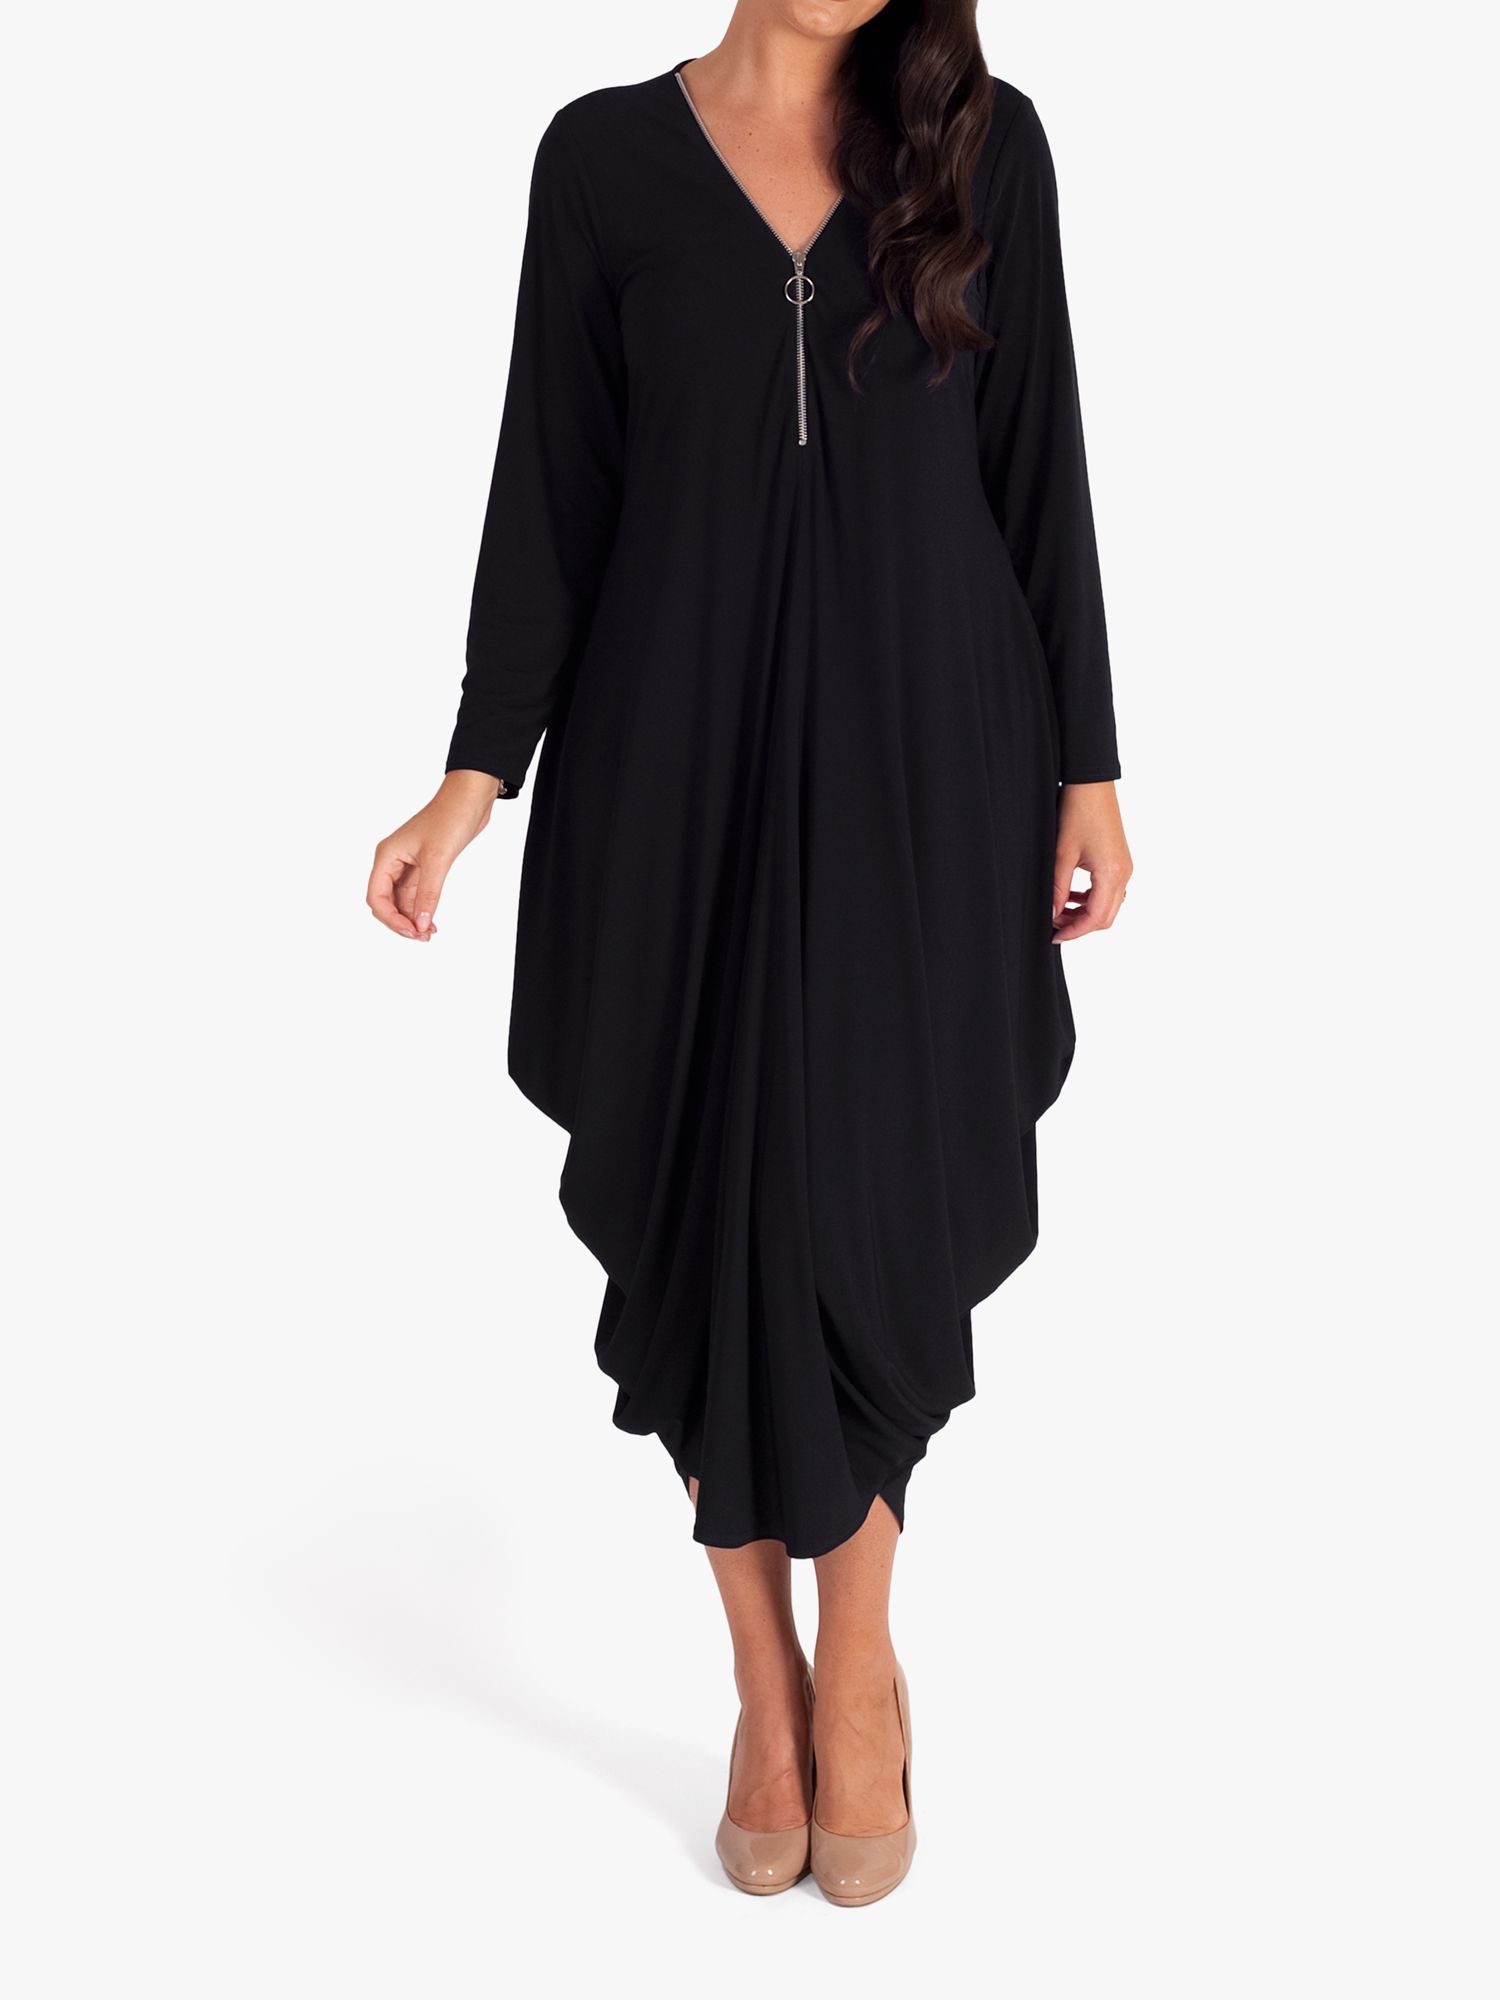 chesca Zip Drape Dress, Black at John Lewis & Partners